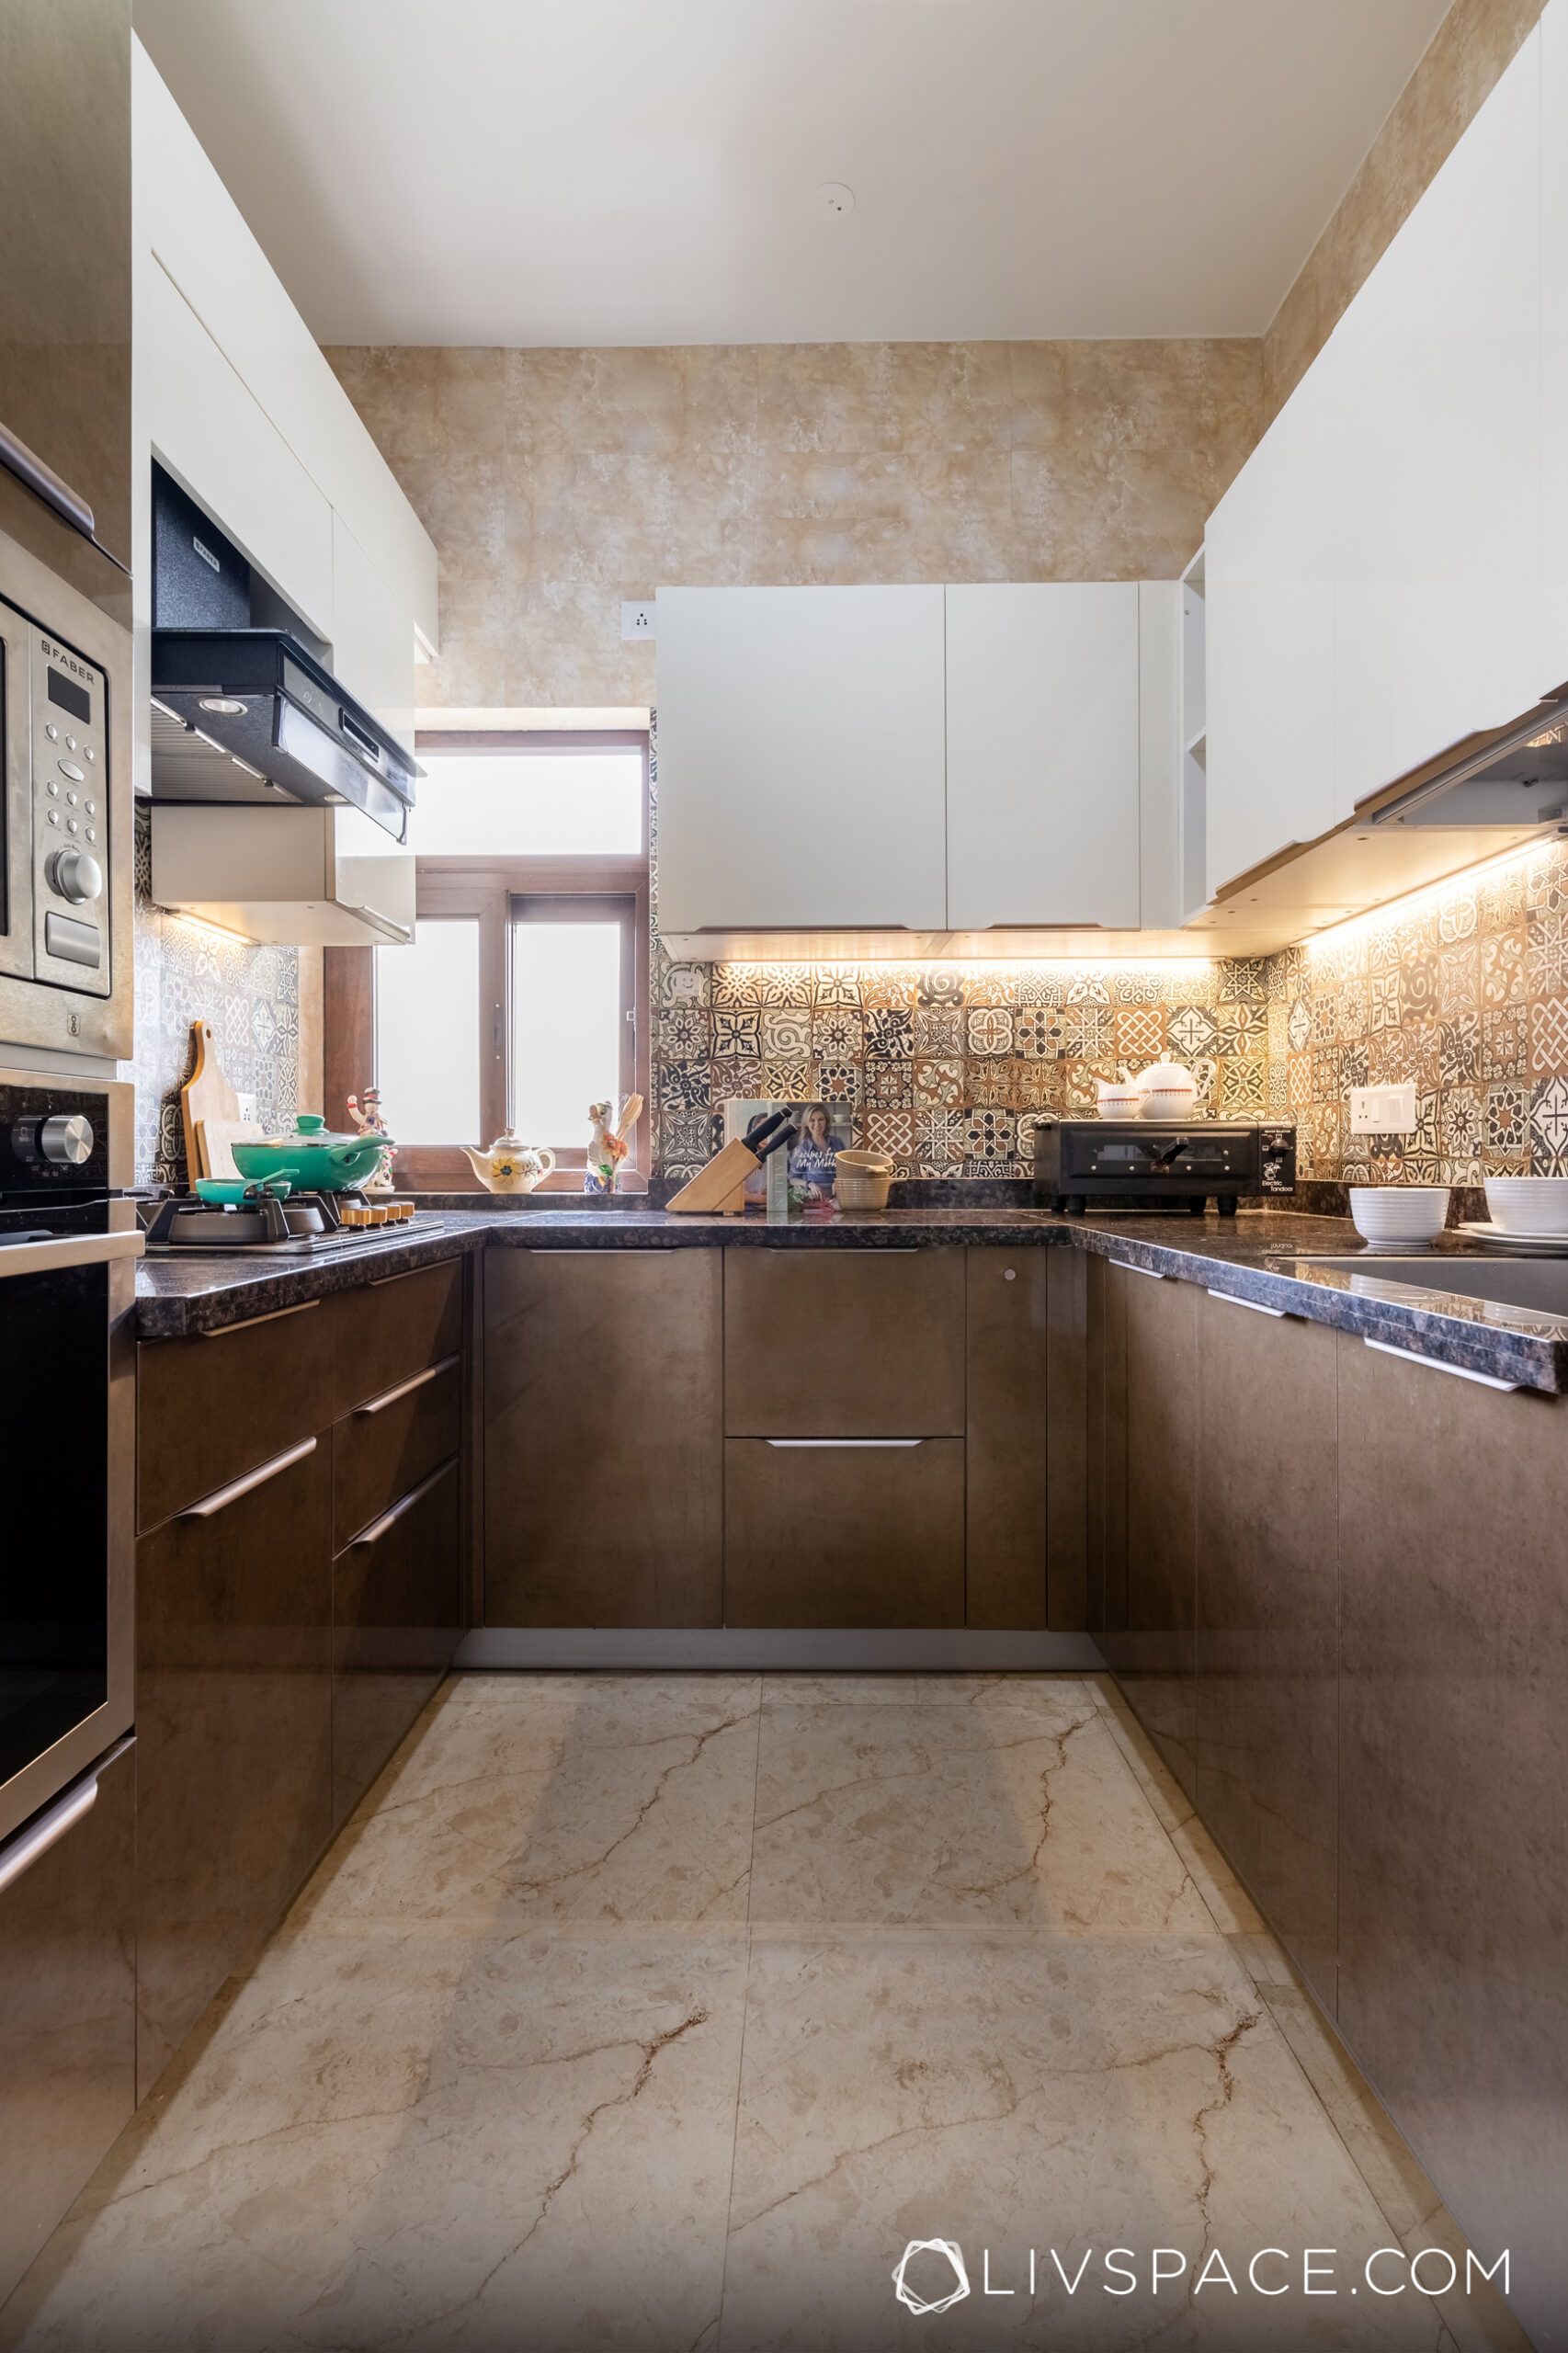  3bhk-home-design-u-shaped-kitchen-layout